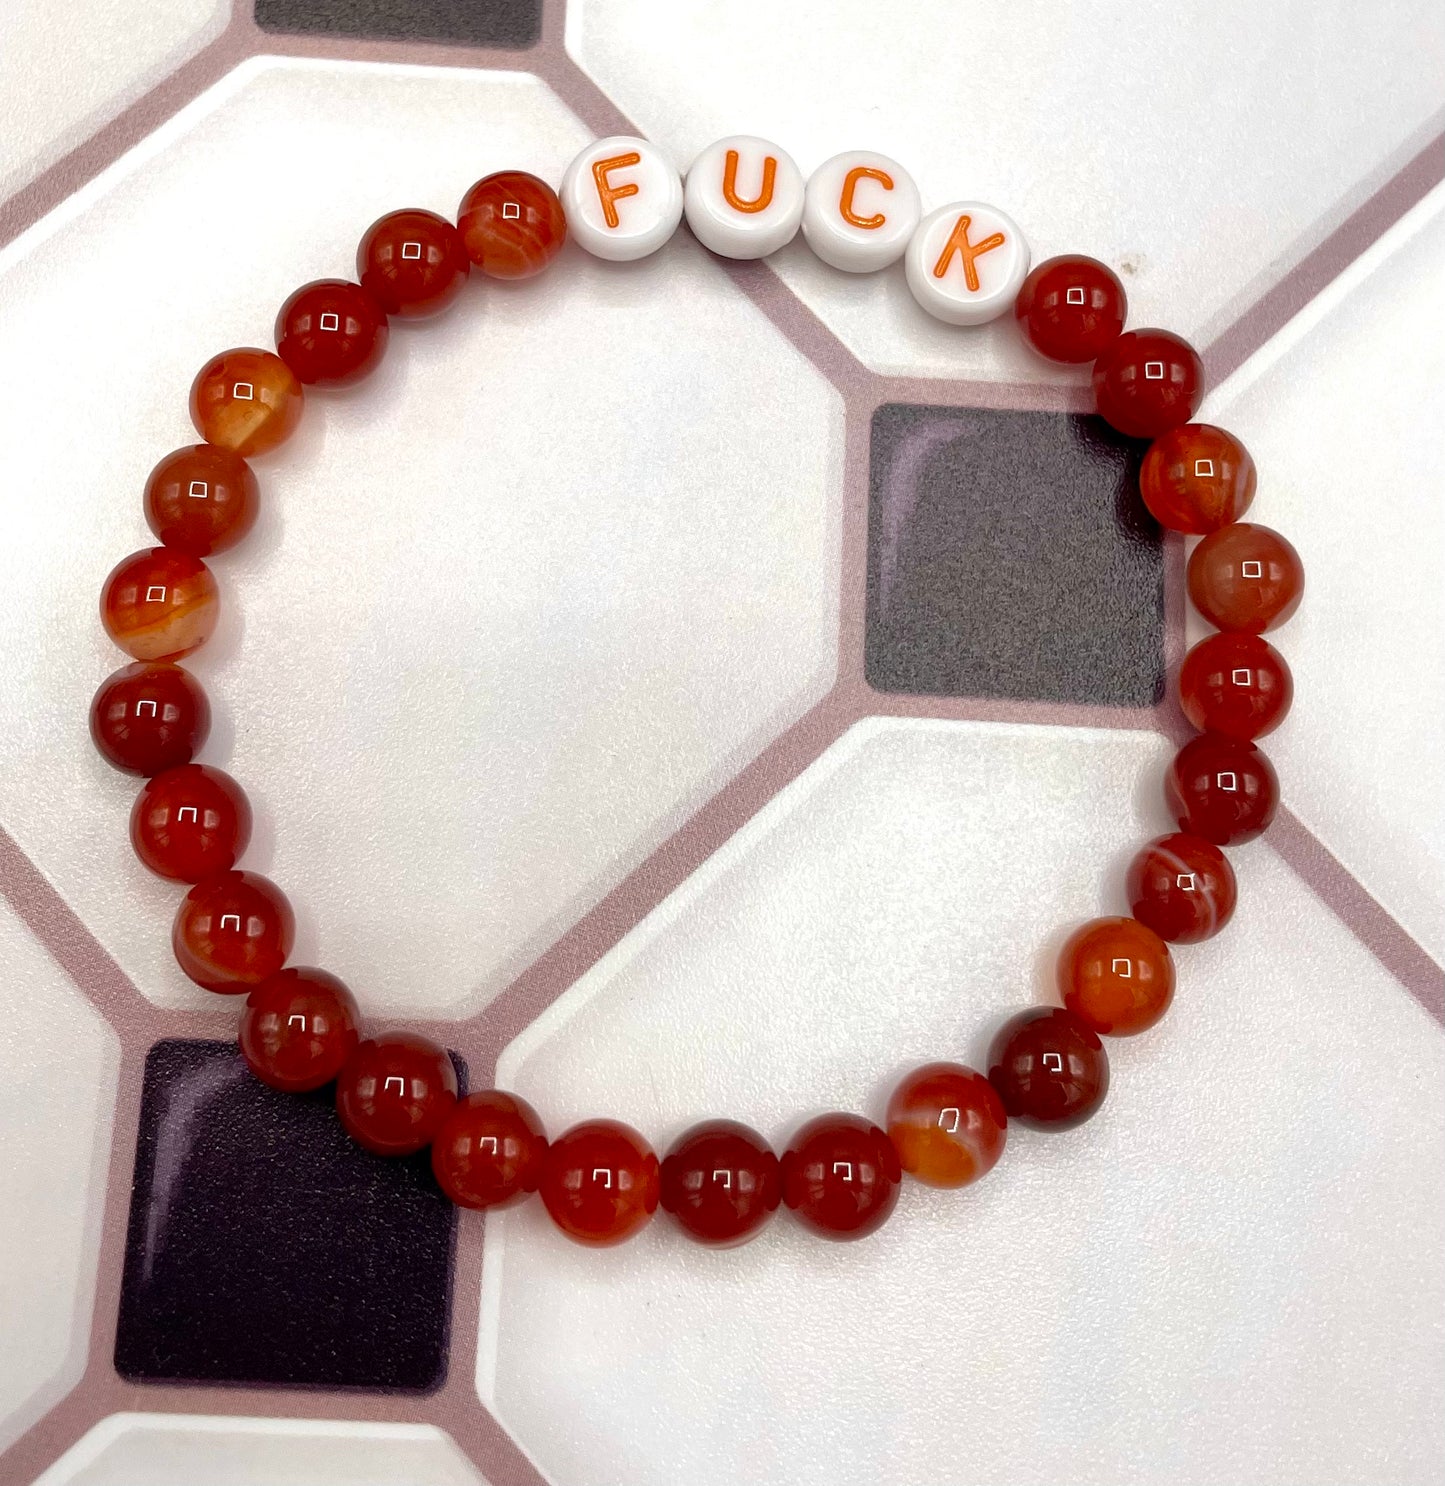 Gemstone "FUCK" stretch Bracelet